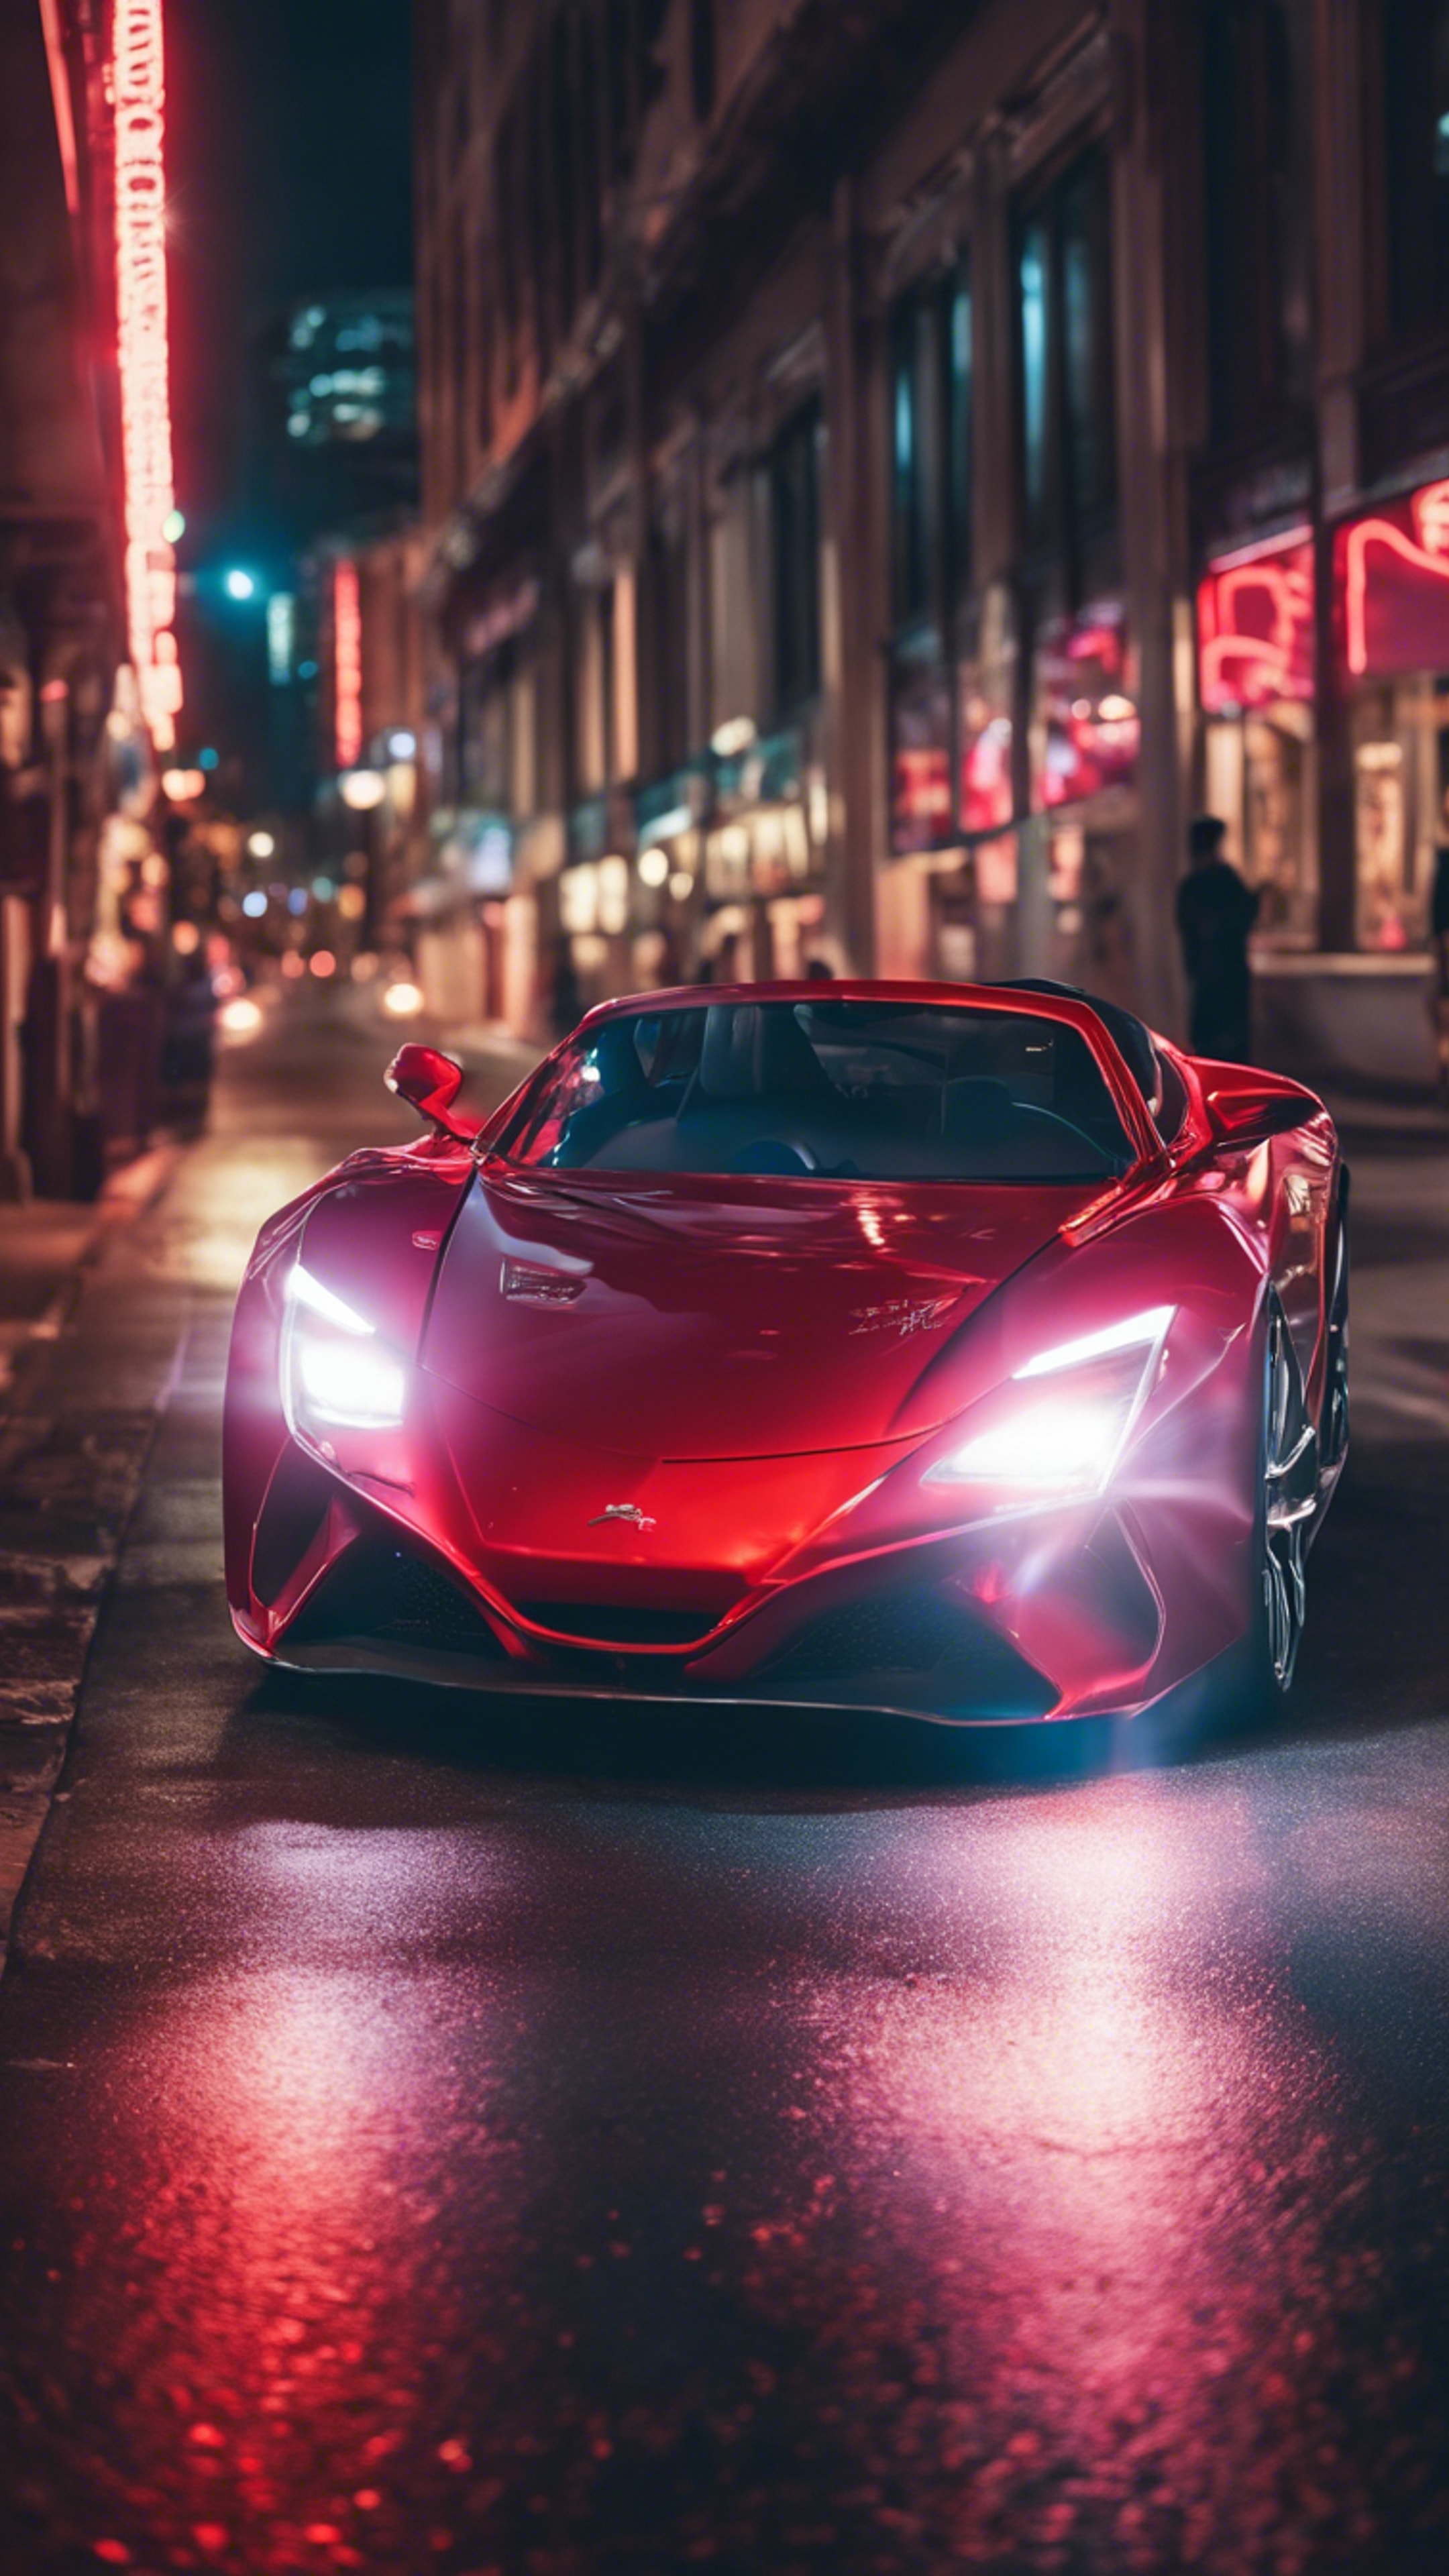 A sleek, cool red neon sports car zipping along a nighttime city street. Валлпапер[c8ae8bc93cf04b2eb441]